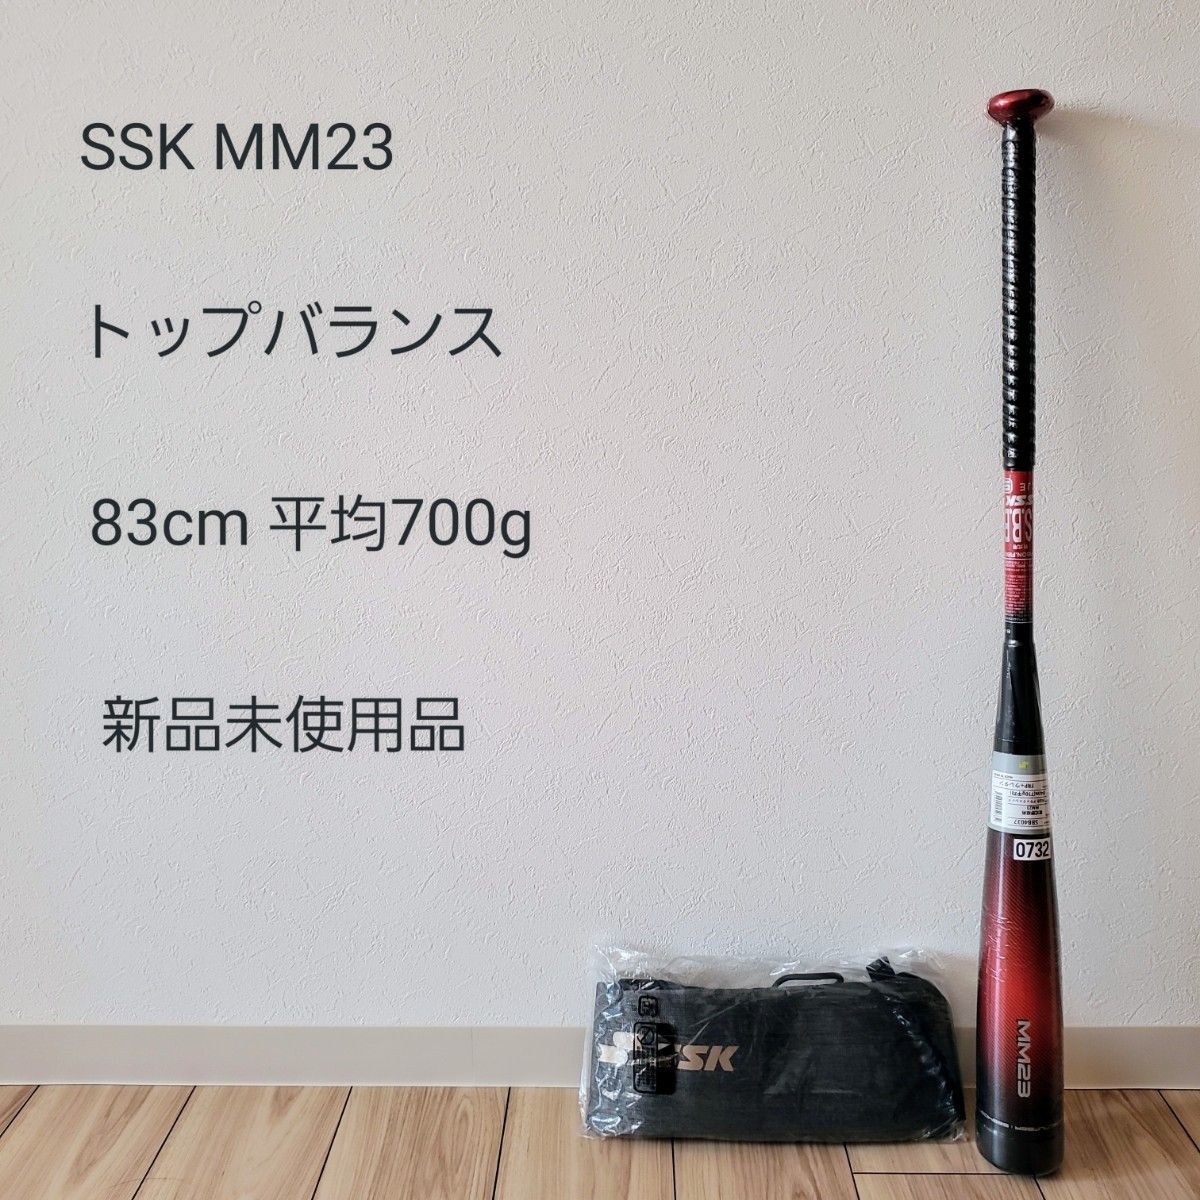 SSK MM23 トップバランス 83cm 700g平均 新品未使用品 野球 軟式 バット